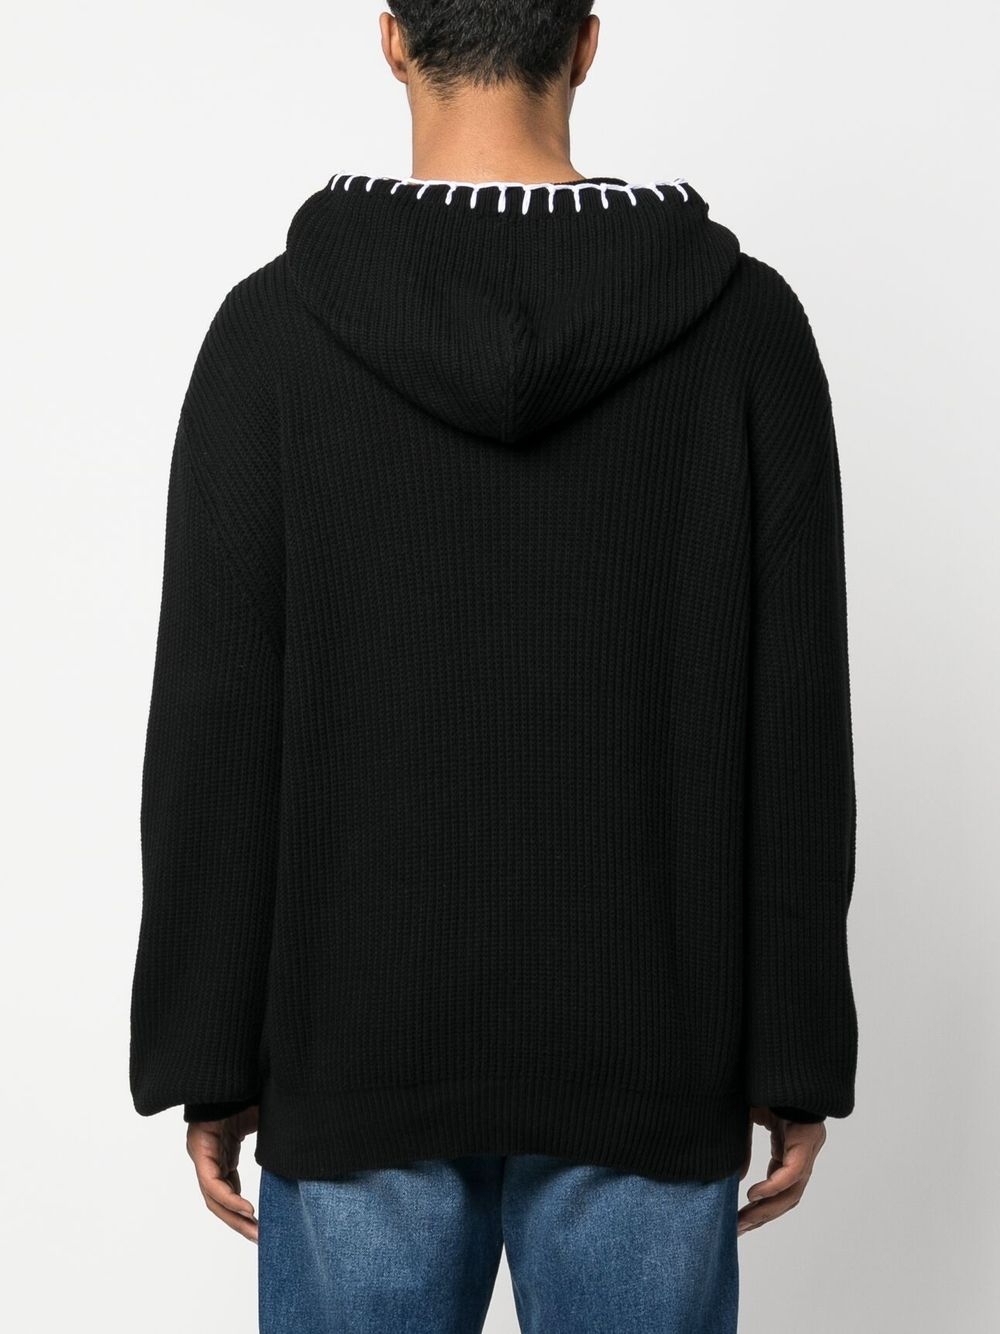 Barrow's Sweaters Black